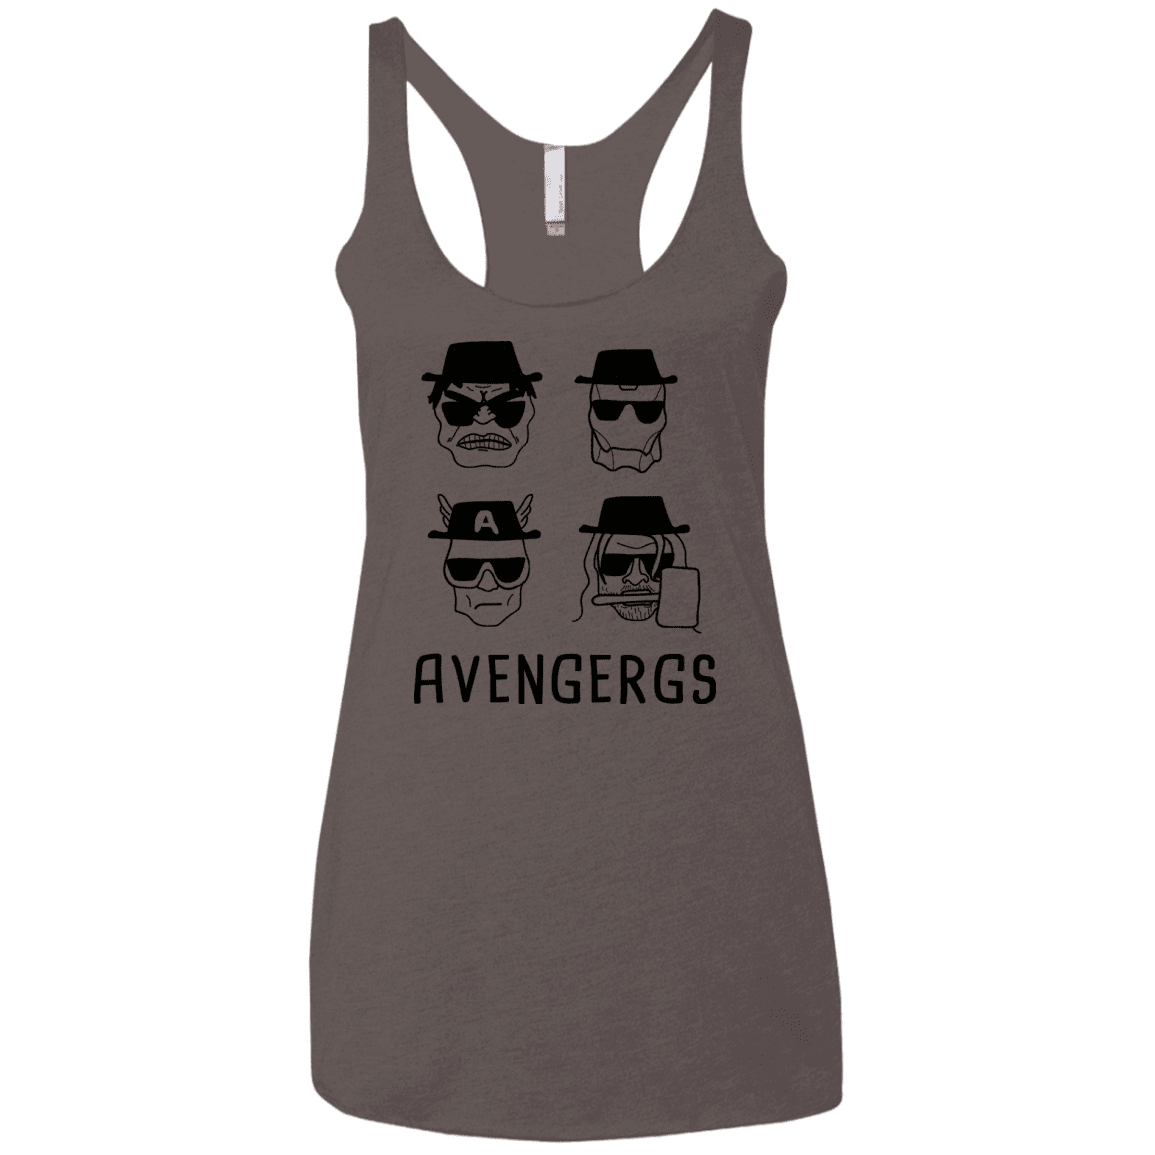 T-Shirts Macchiato / X-Small Avengergs Women's Triblend Racerback Tank